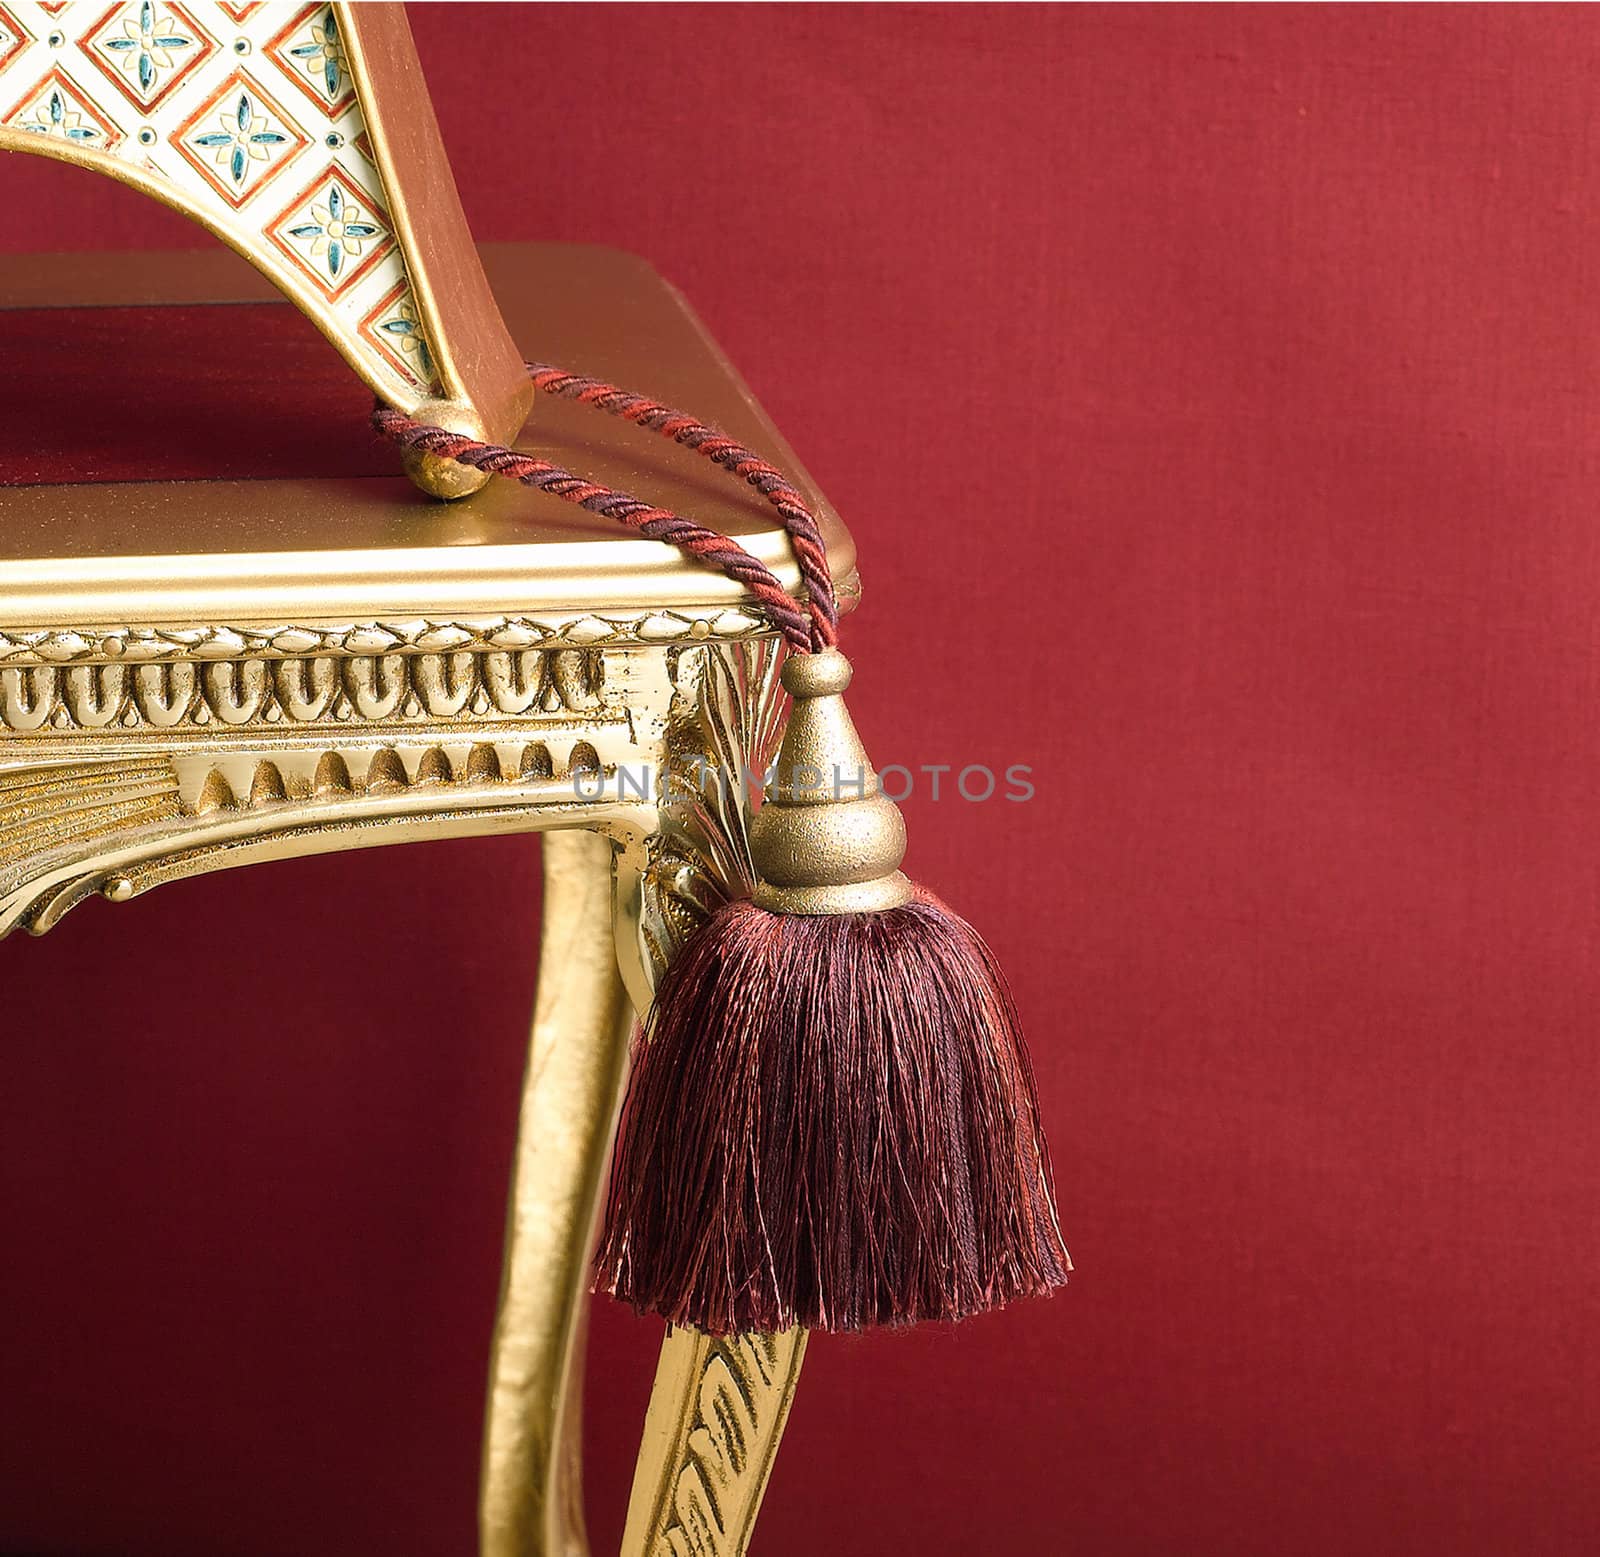 cute design of tassel on the golden chair